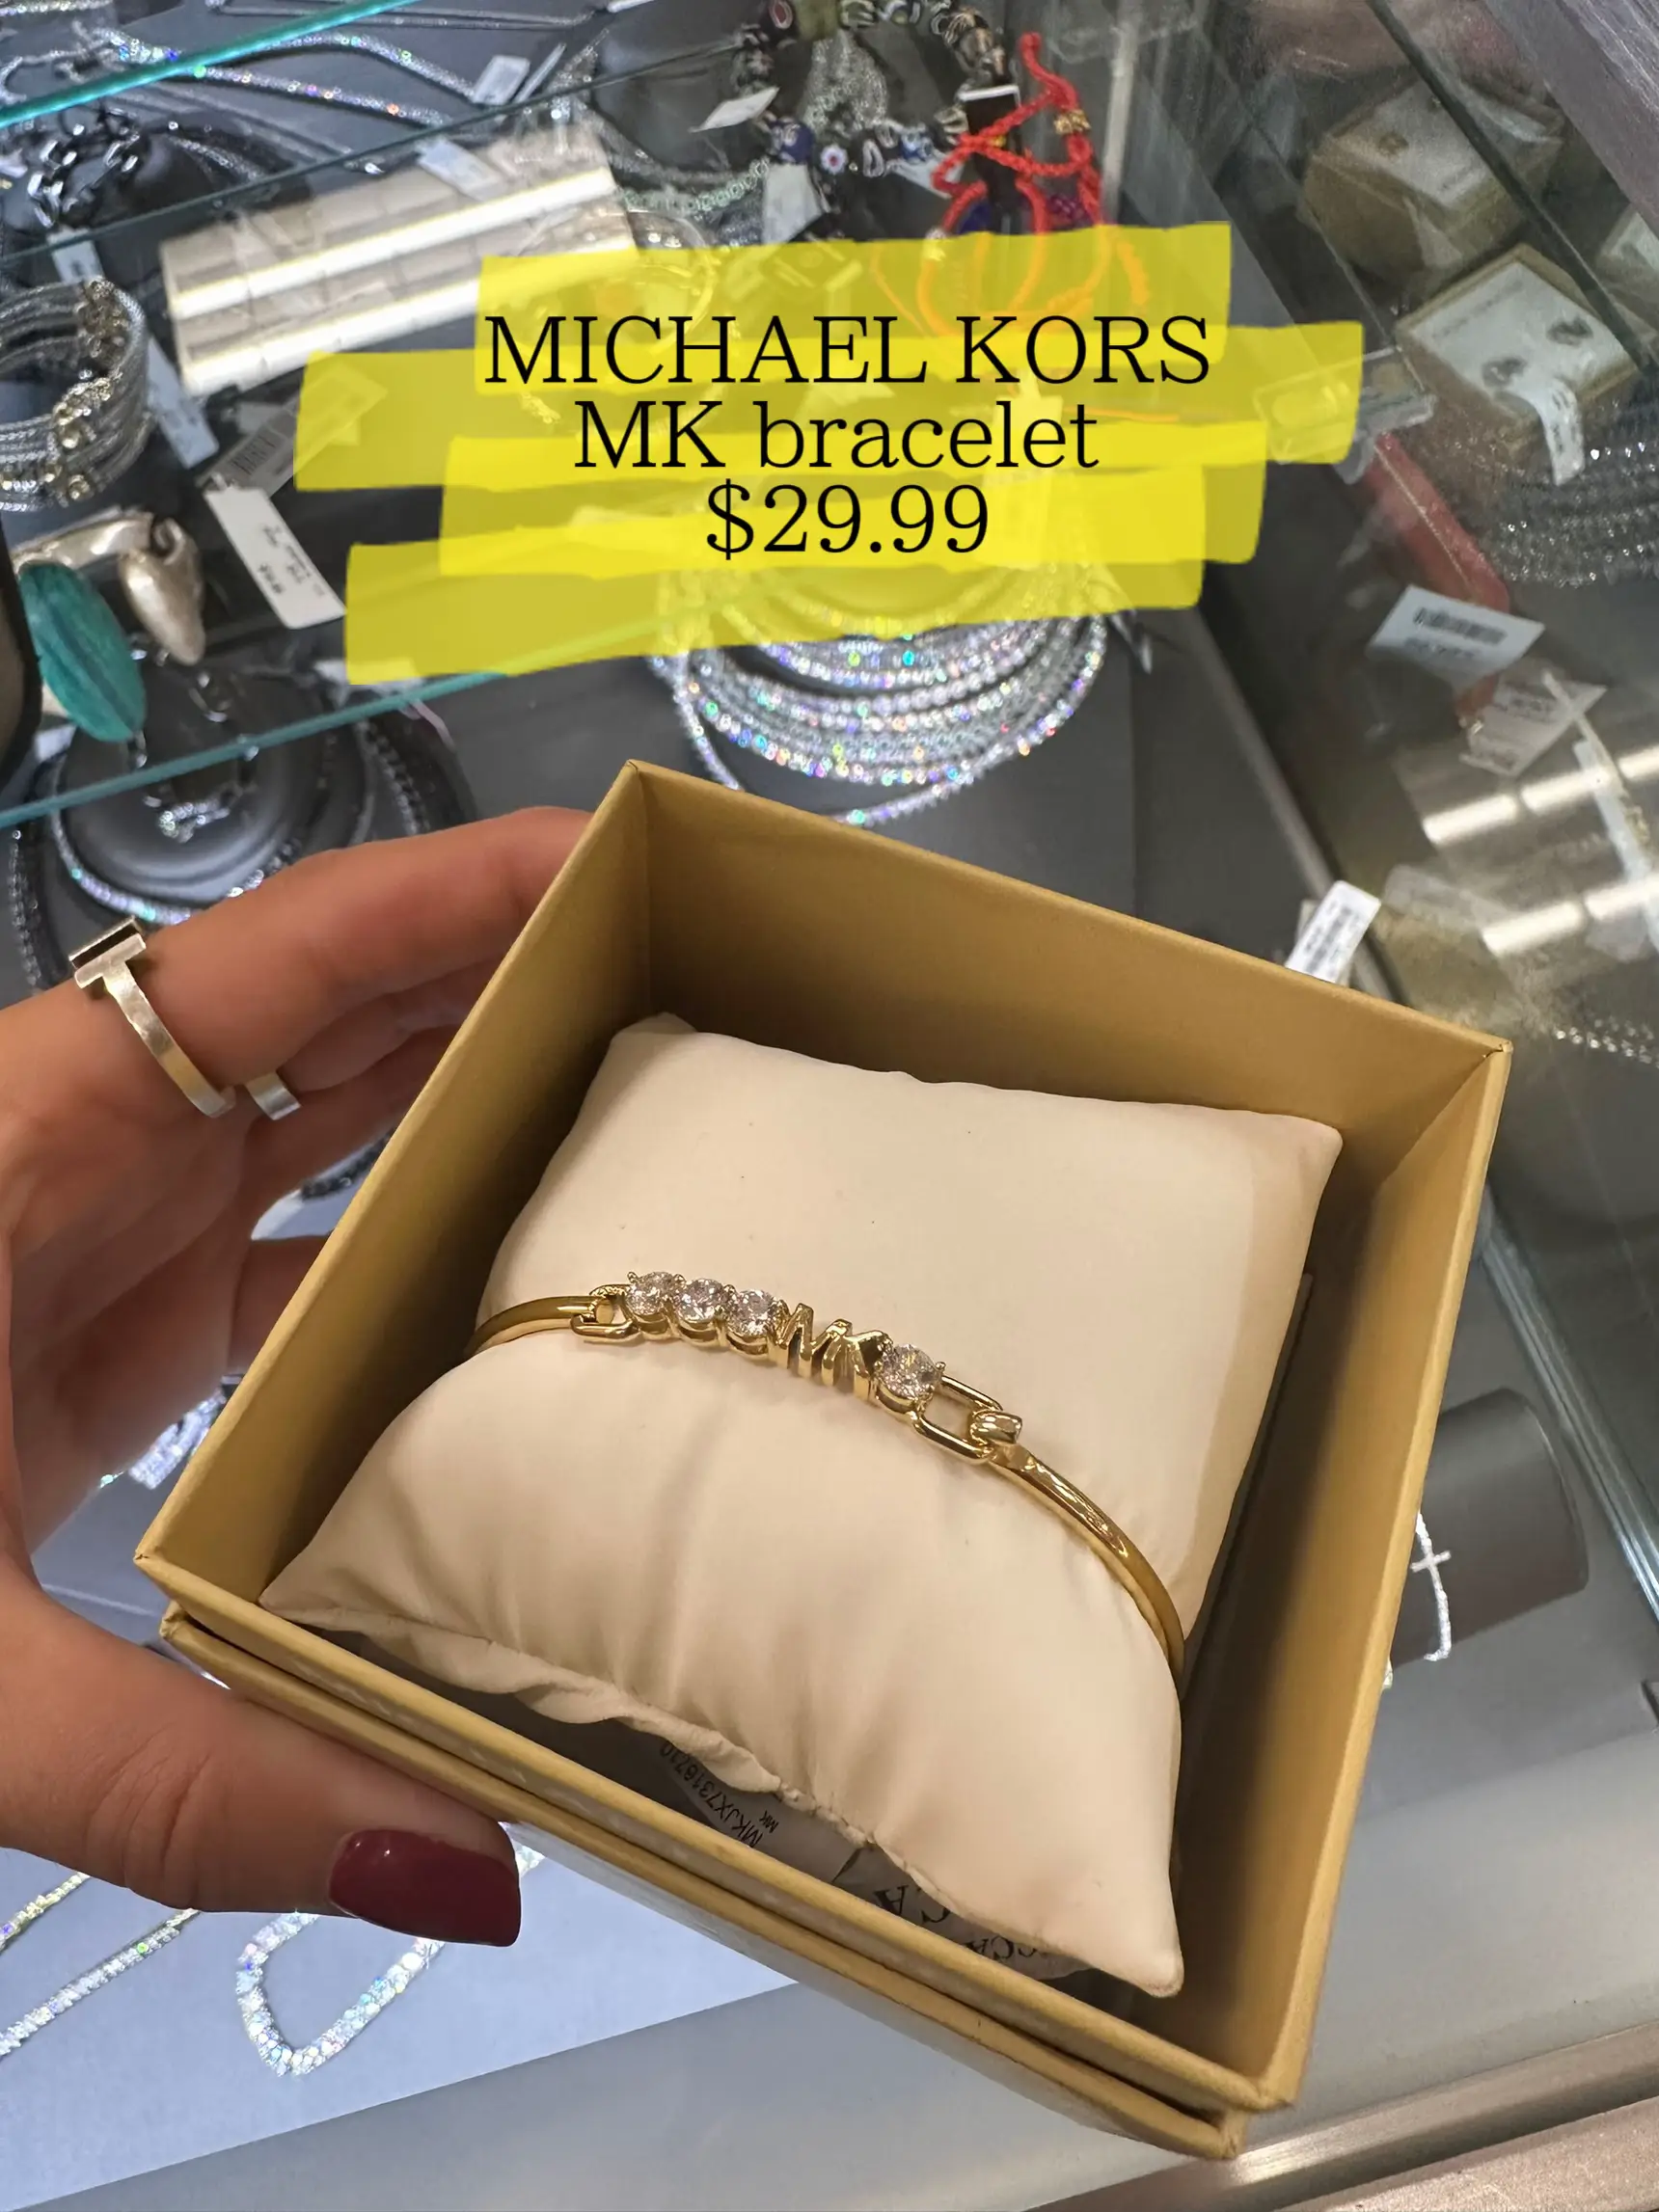 Michael Kors at Marshalls, Gallery posted by Kim Battaglia